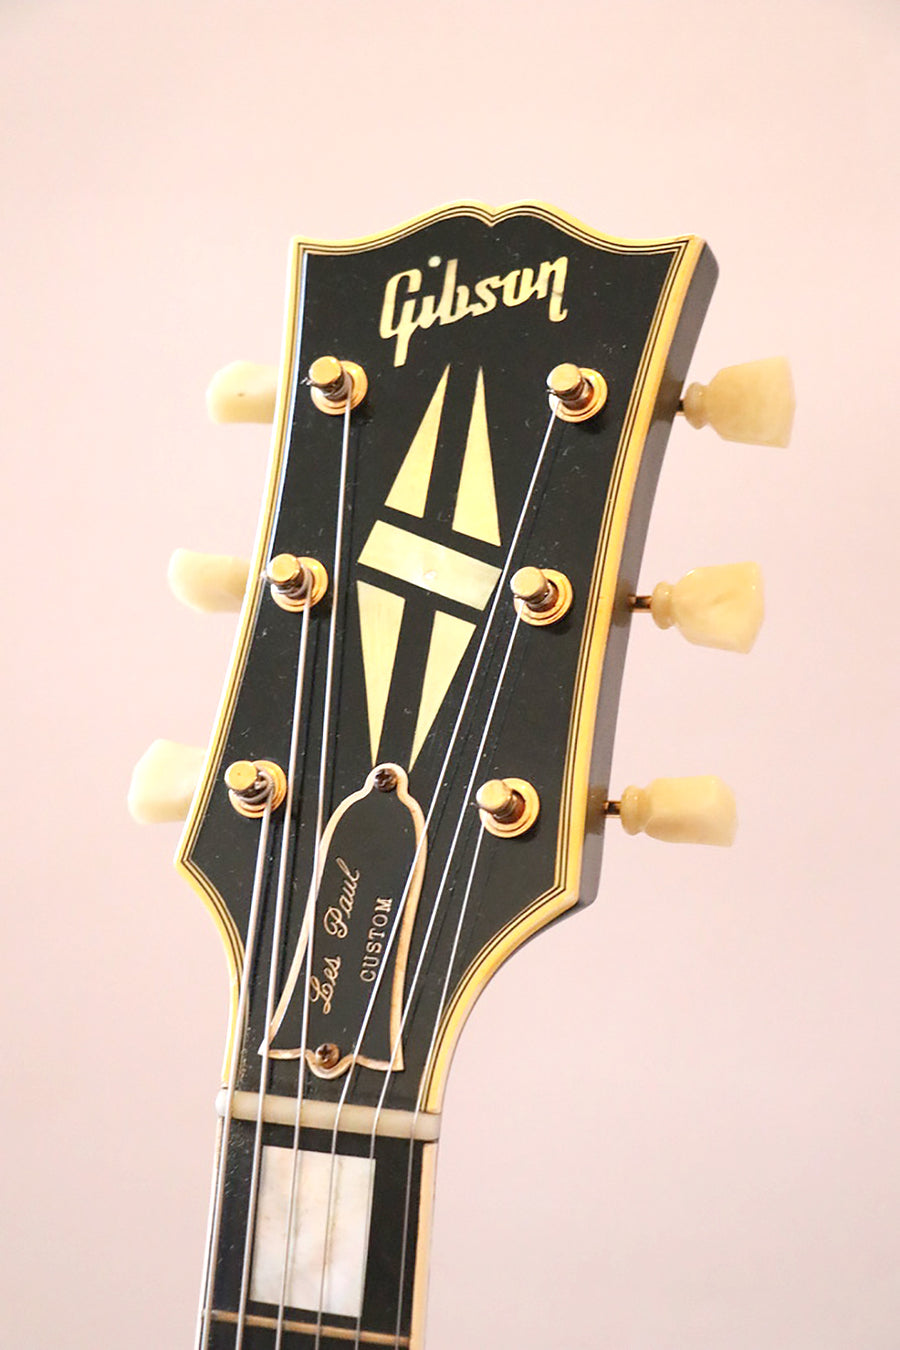 Gibson Les Paul Custom 3-Pickup "Black Beauty" 1957